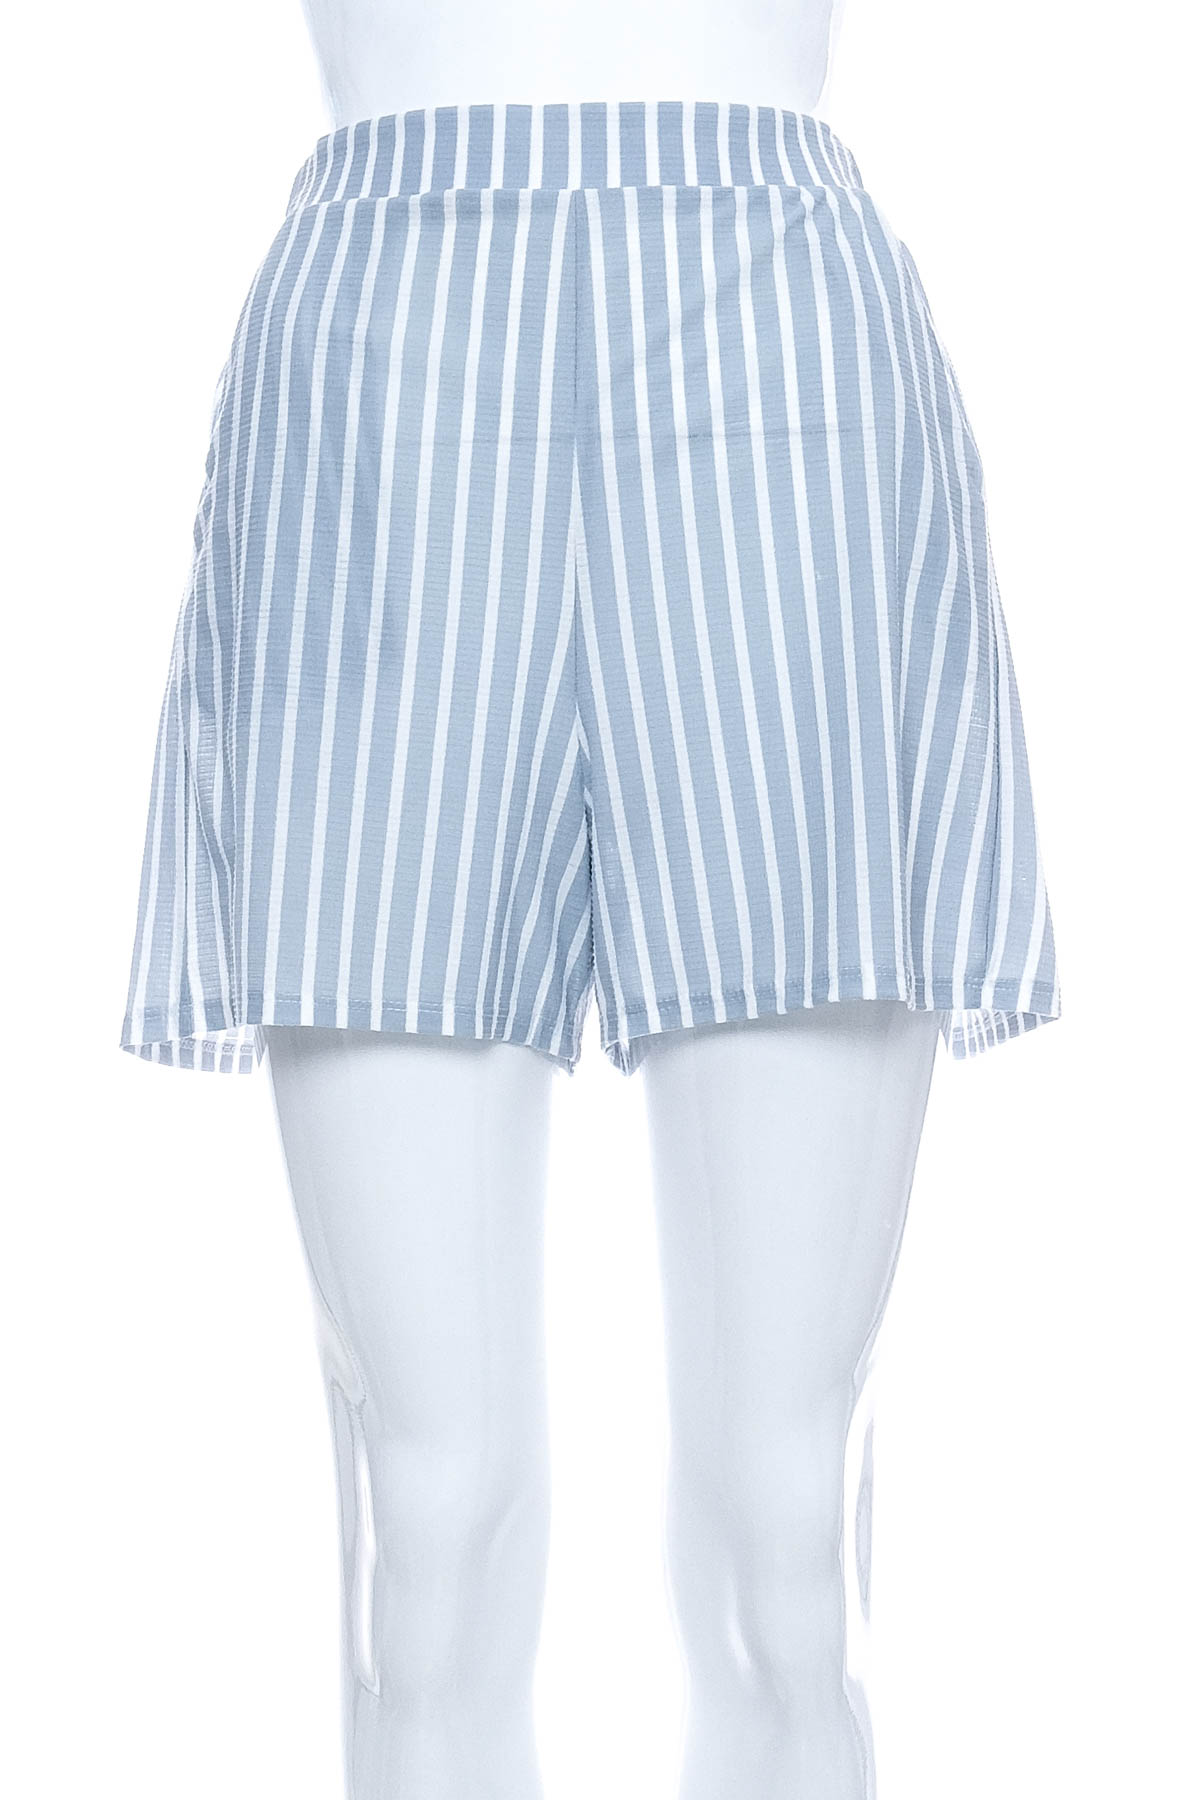 Female shorts - Asos - 0